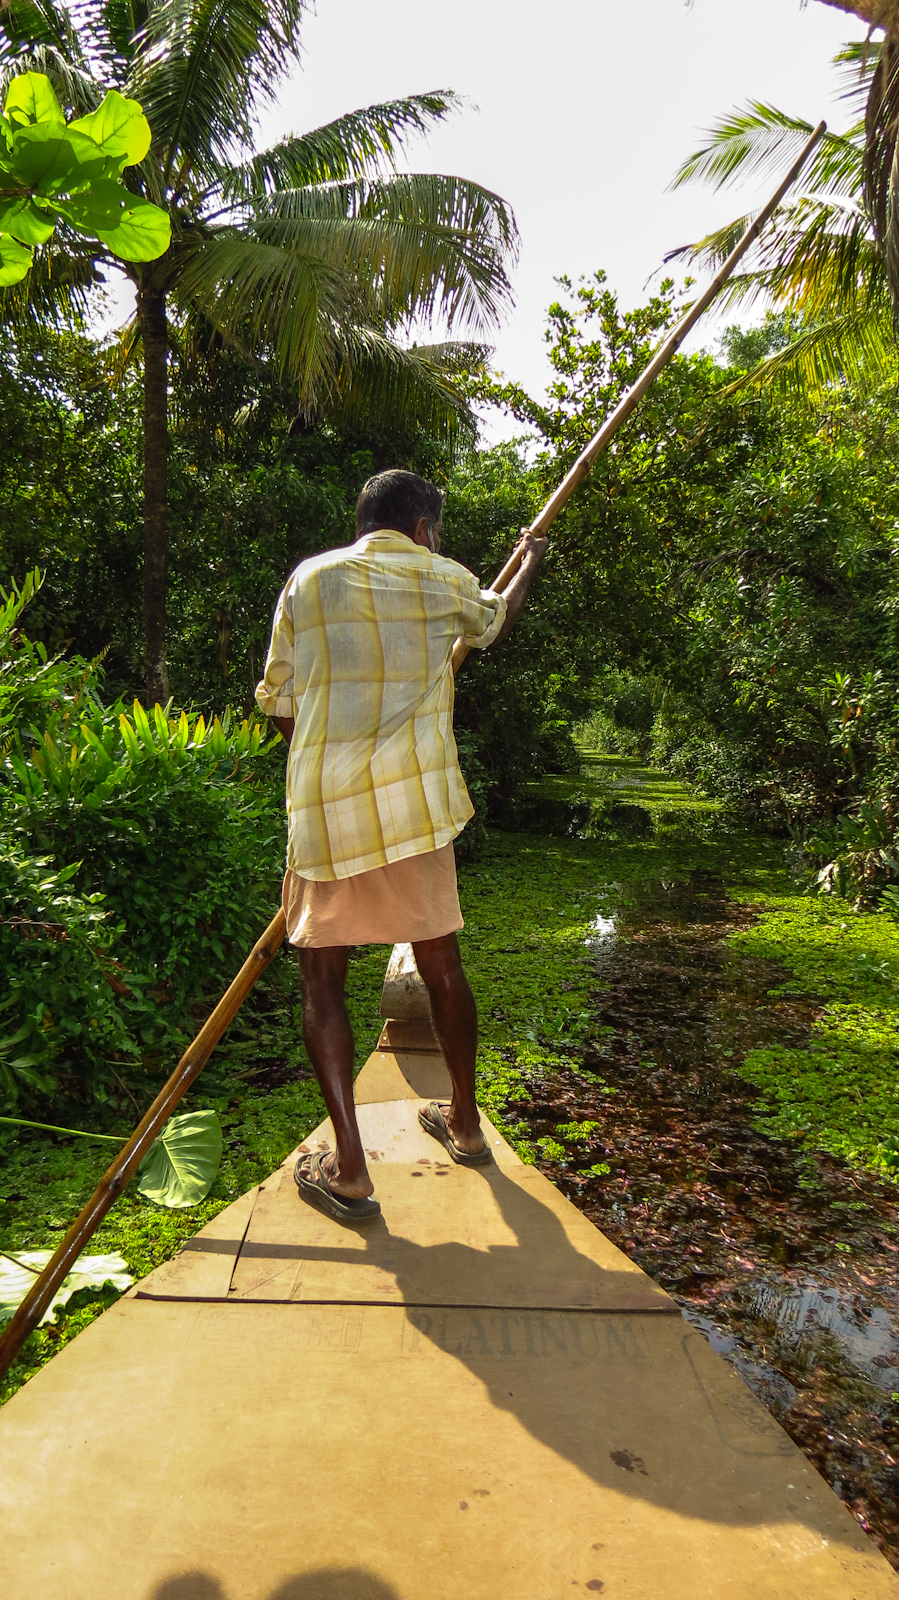 boatman-guides-us-down-narrow-waterway-kerala-backwaters